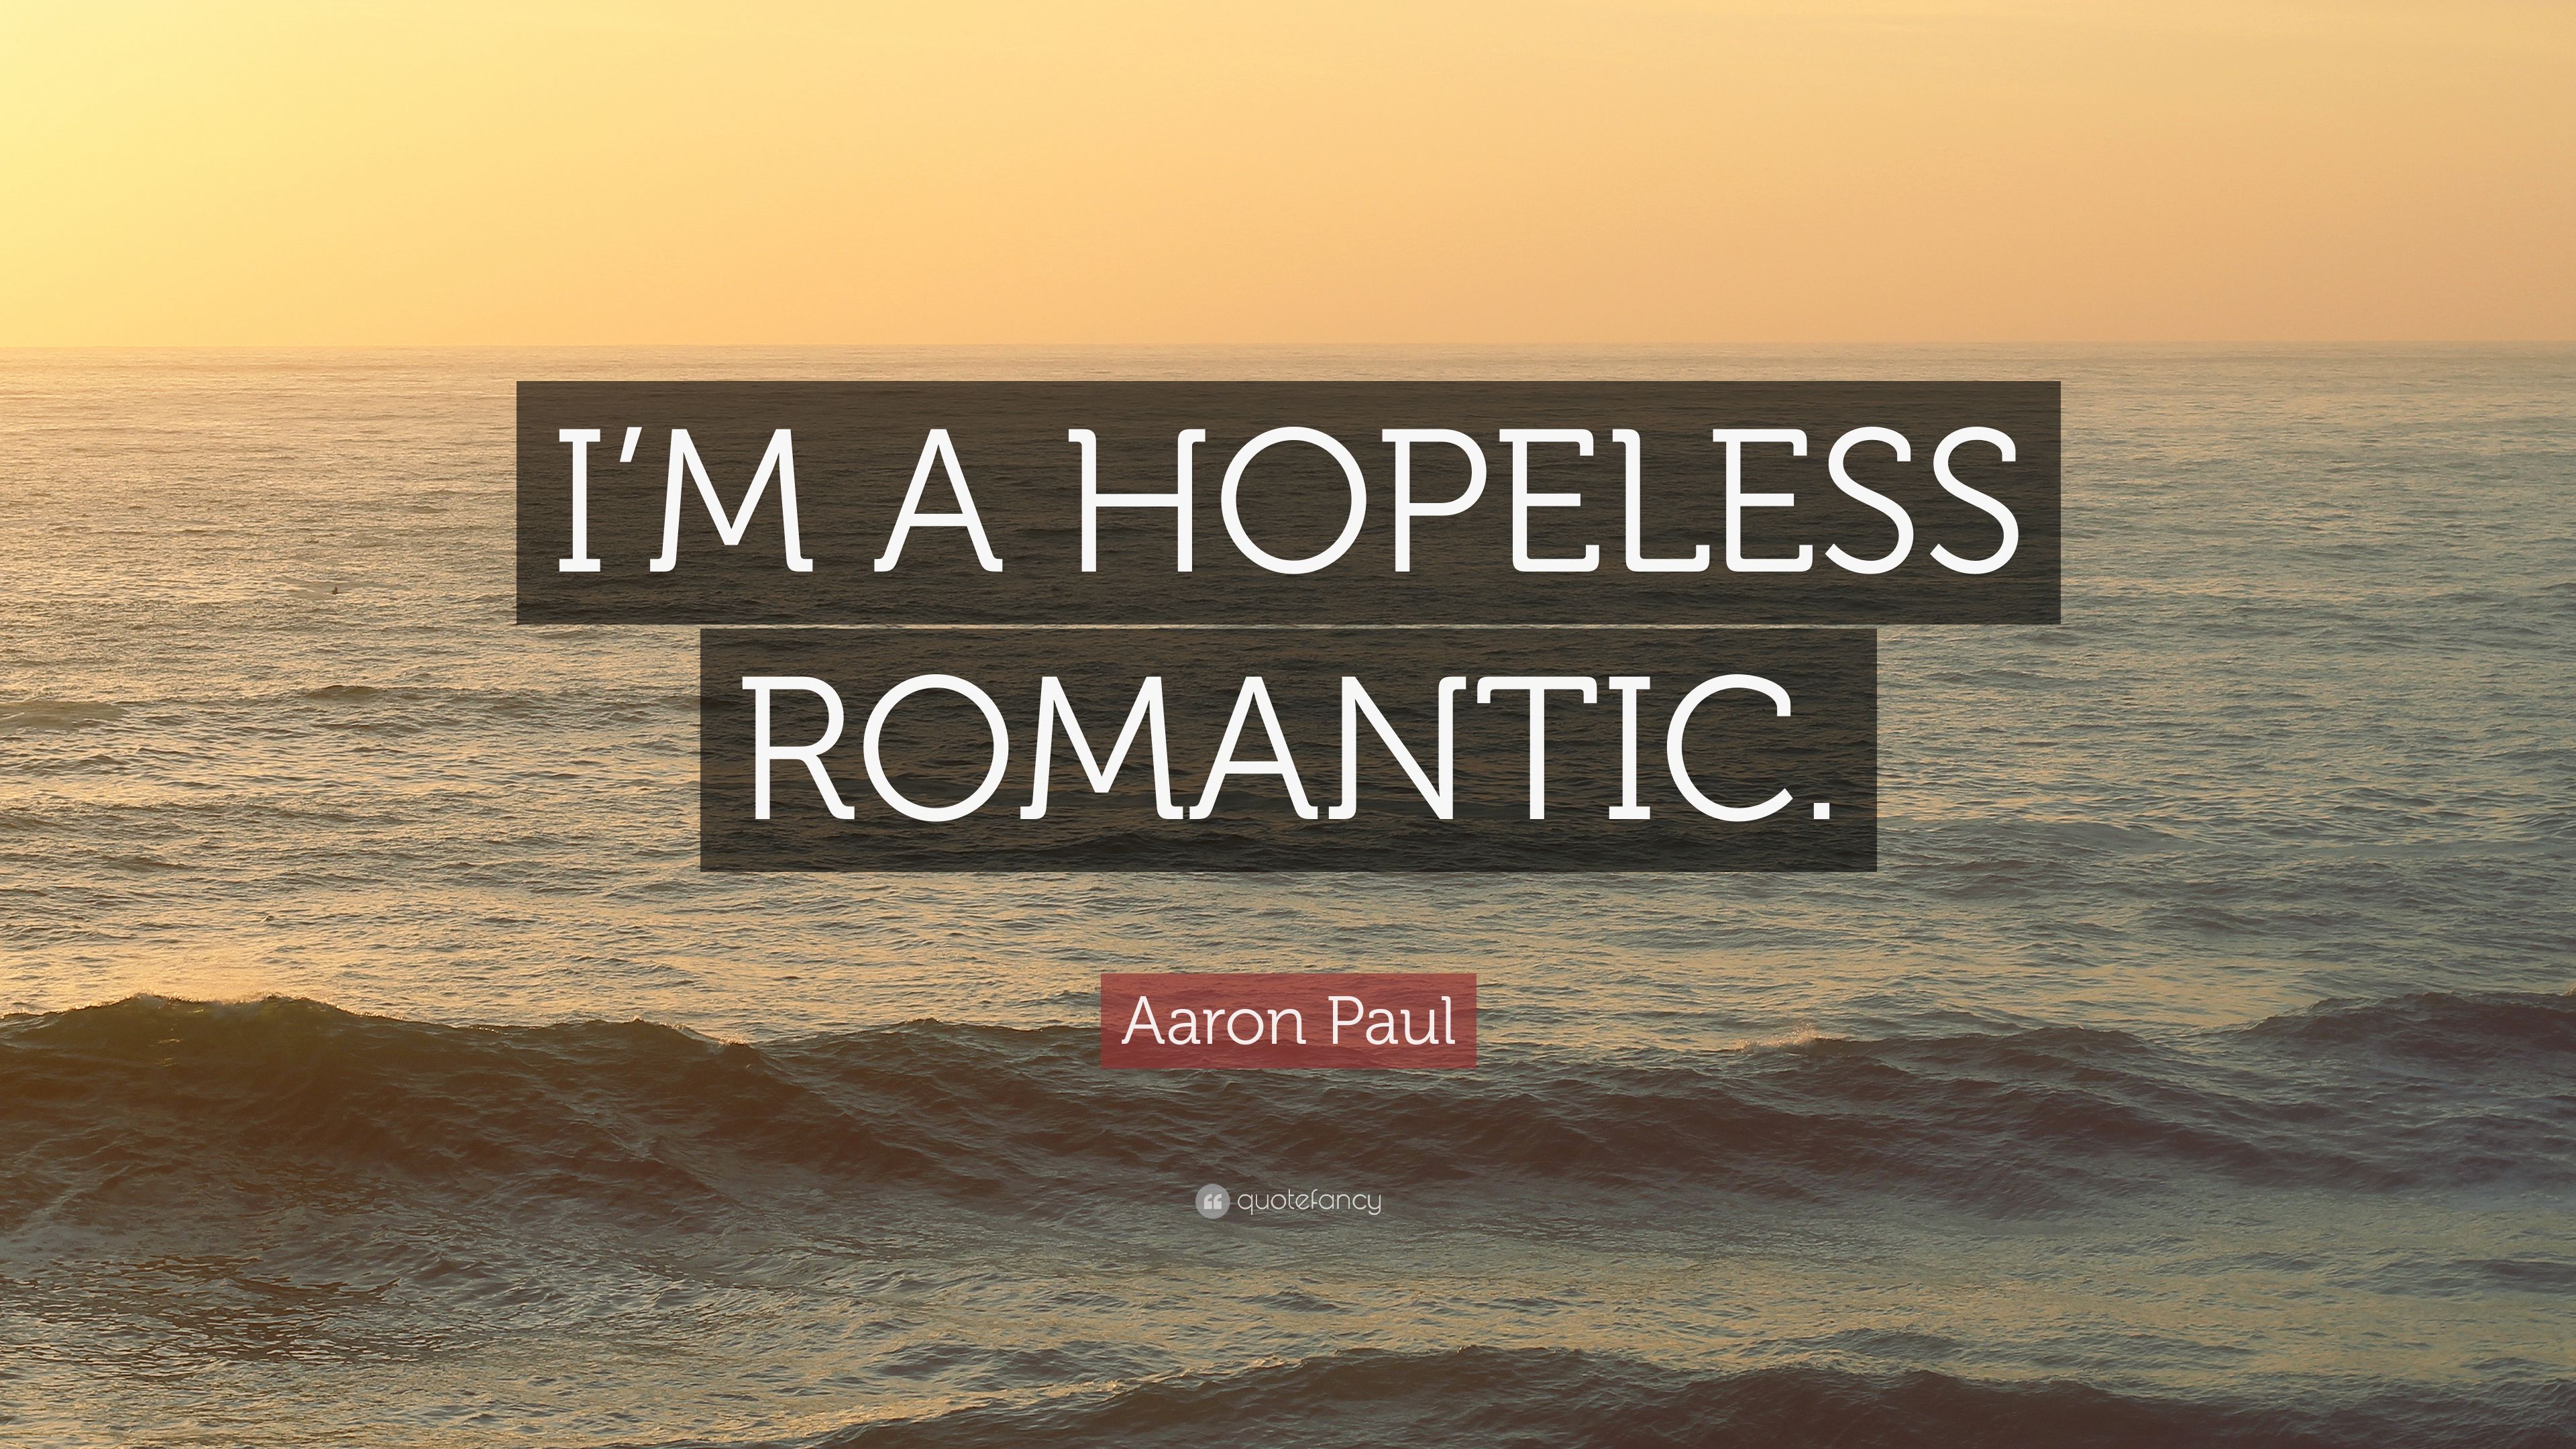 Aaron Paul Quote: “I'M A HOPELESS ROMANTIC.”